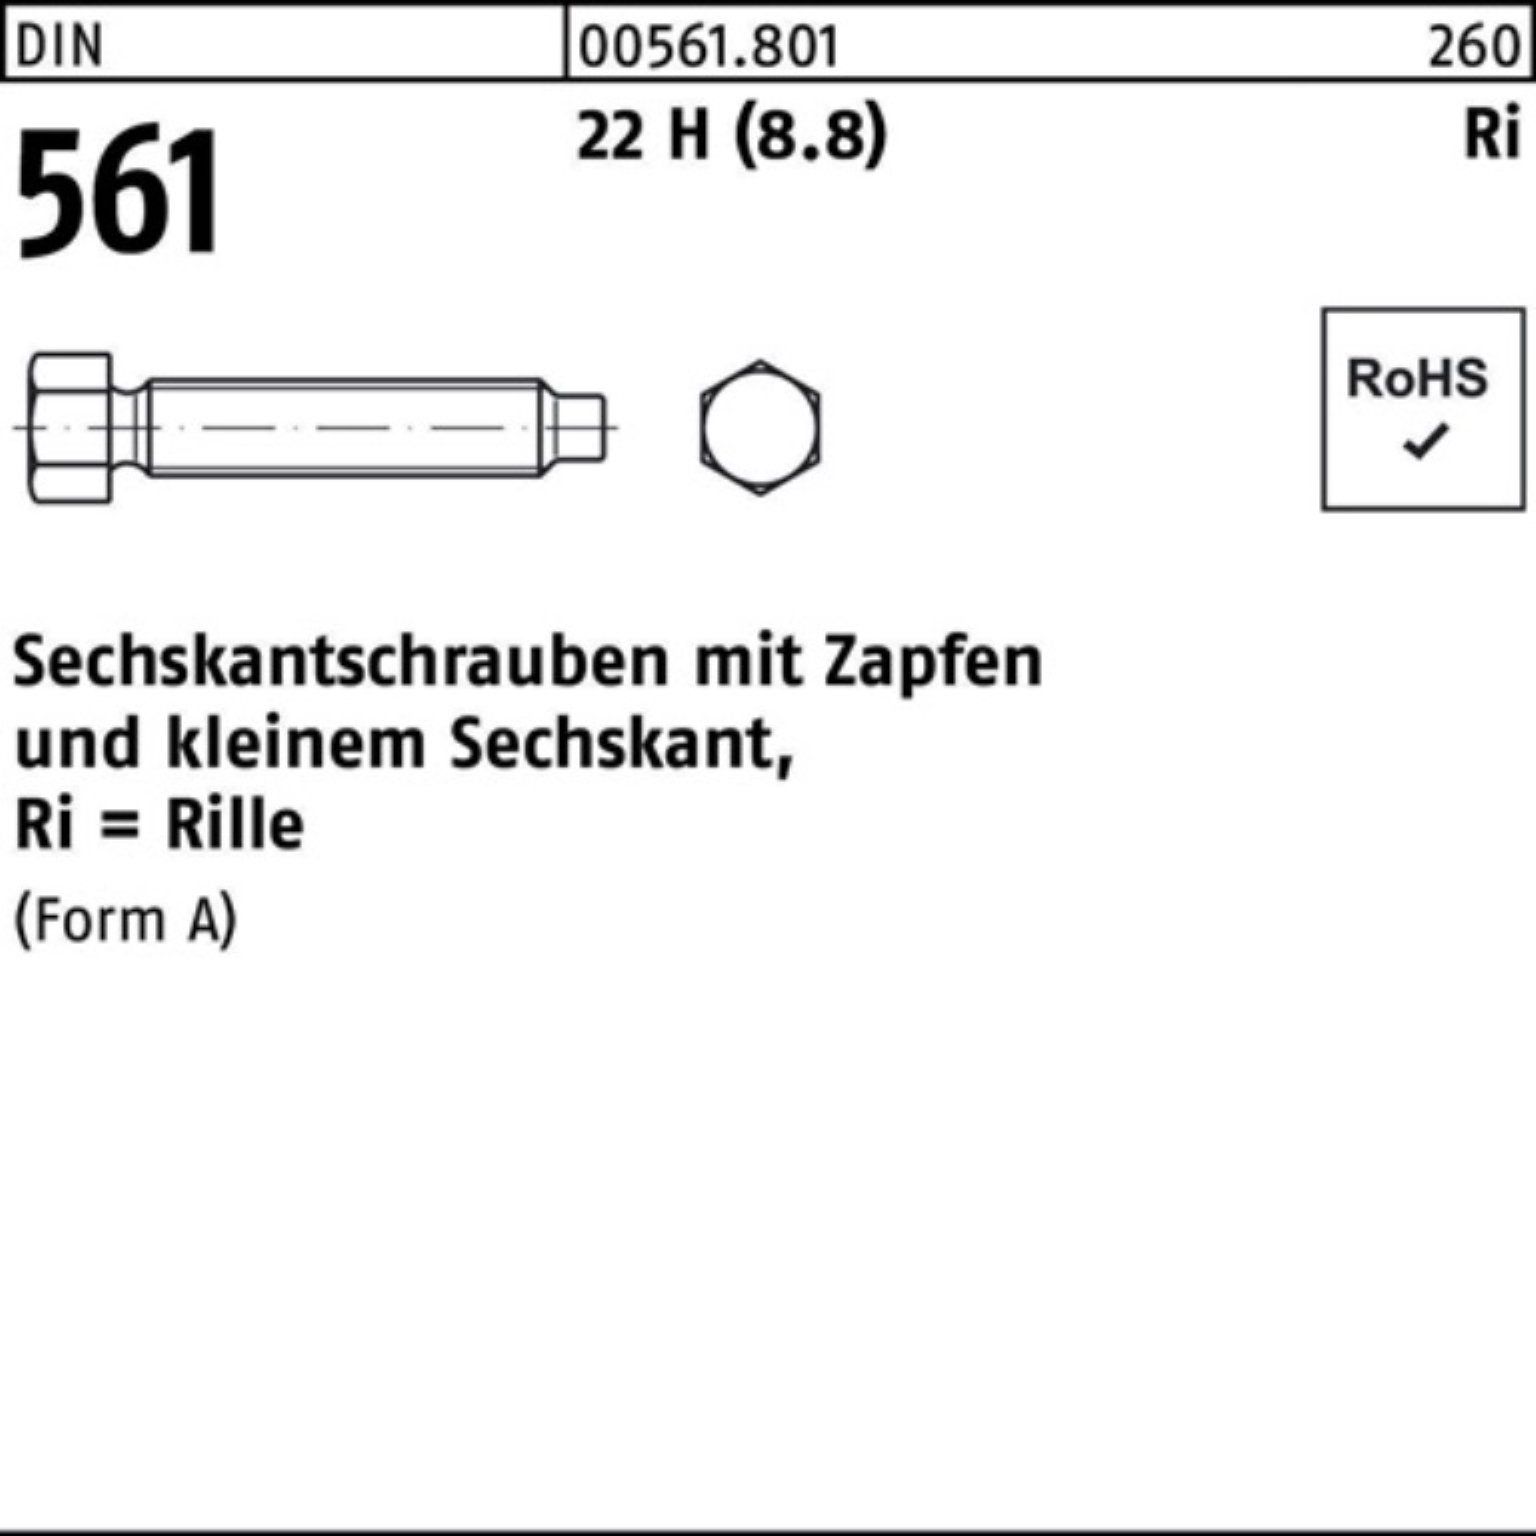 Reyher Sechskantschraube 100er Pack Sechskantschraube DIN 561 Zapfen AM 20x 100 22 H (8.8) 1 St